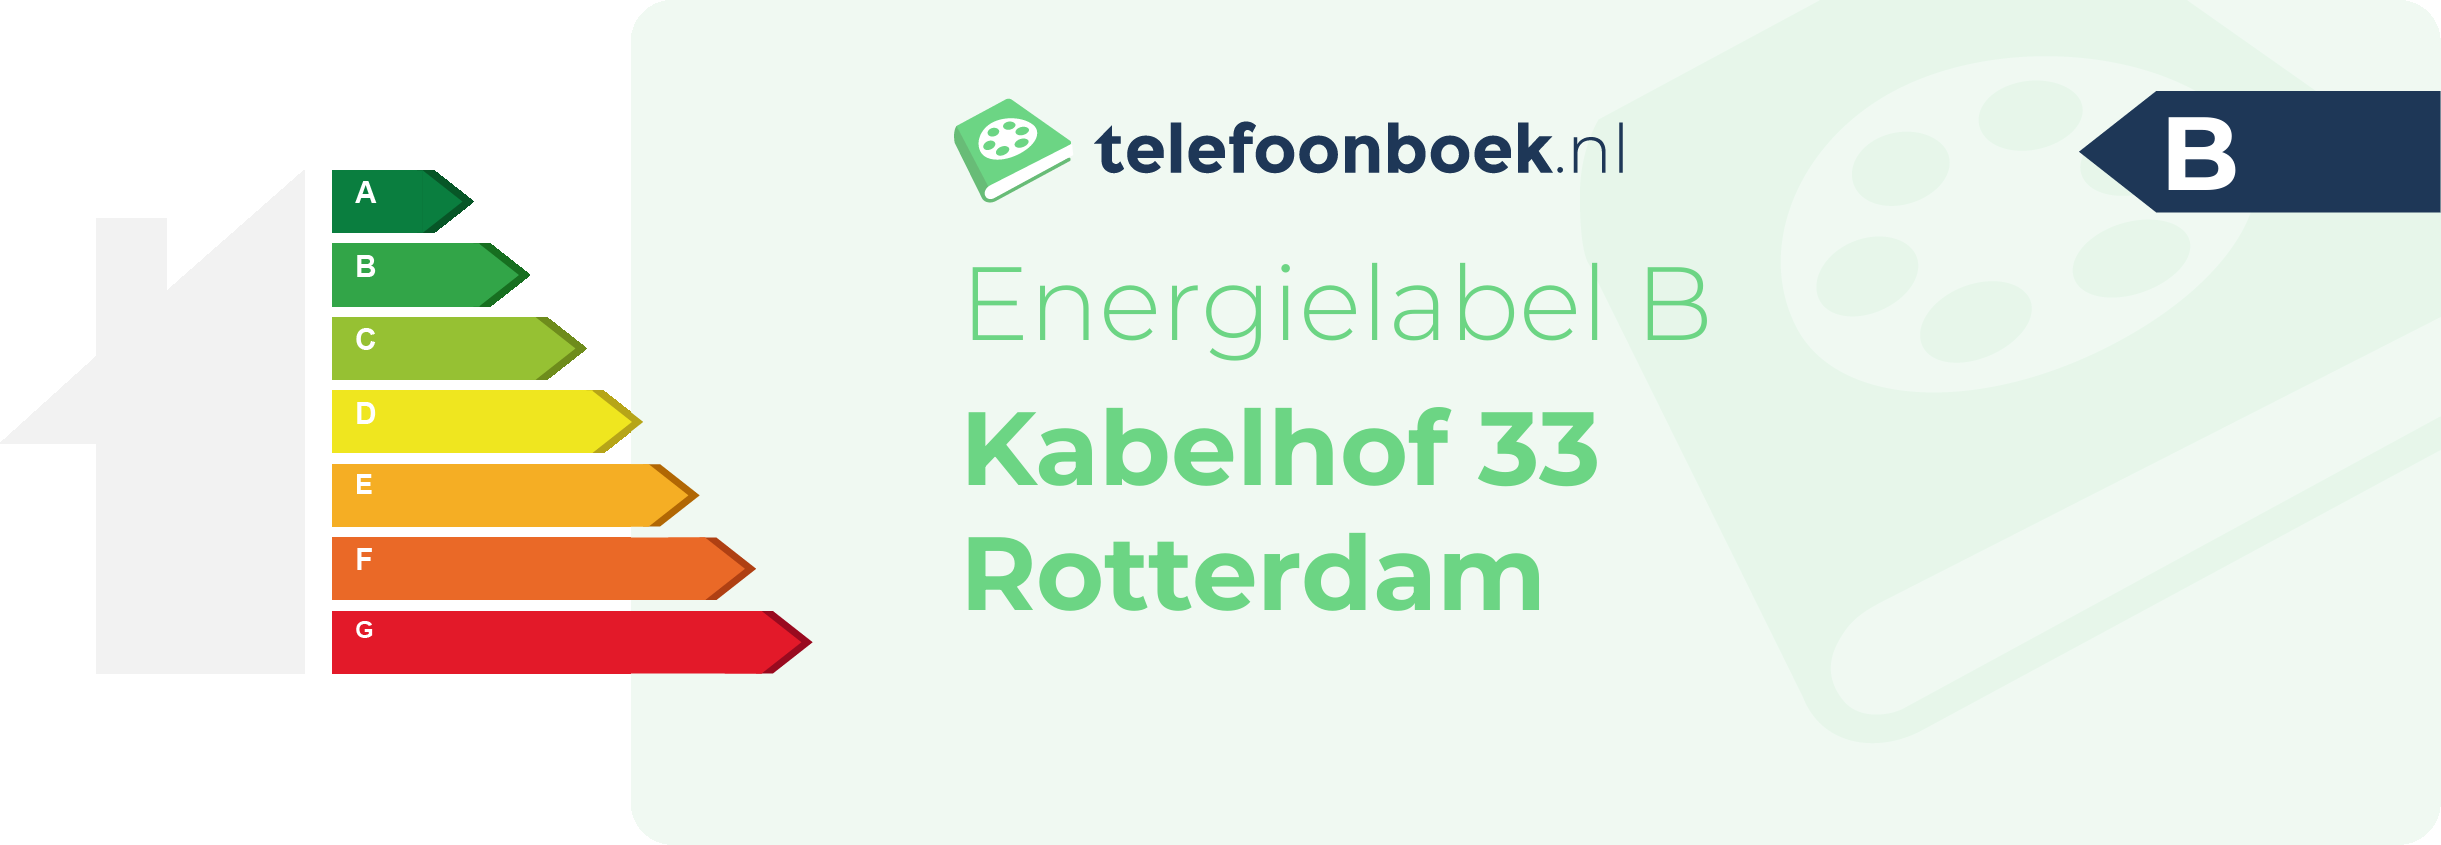 Energielabel Kabelhof 33 Rotterdam